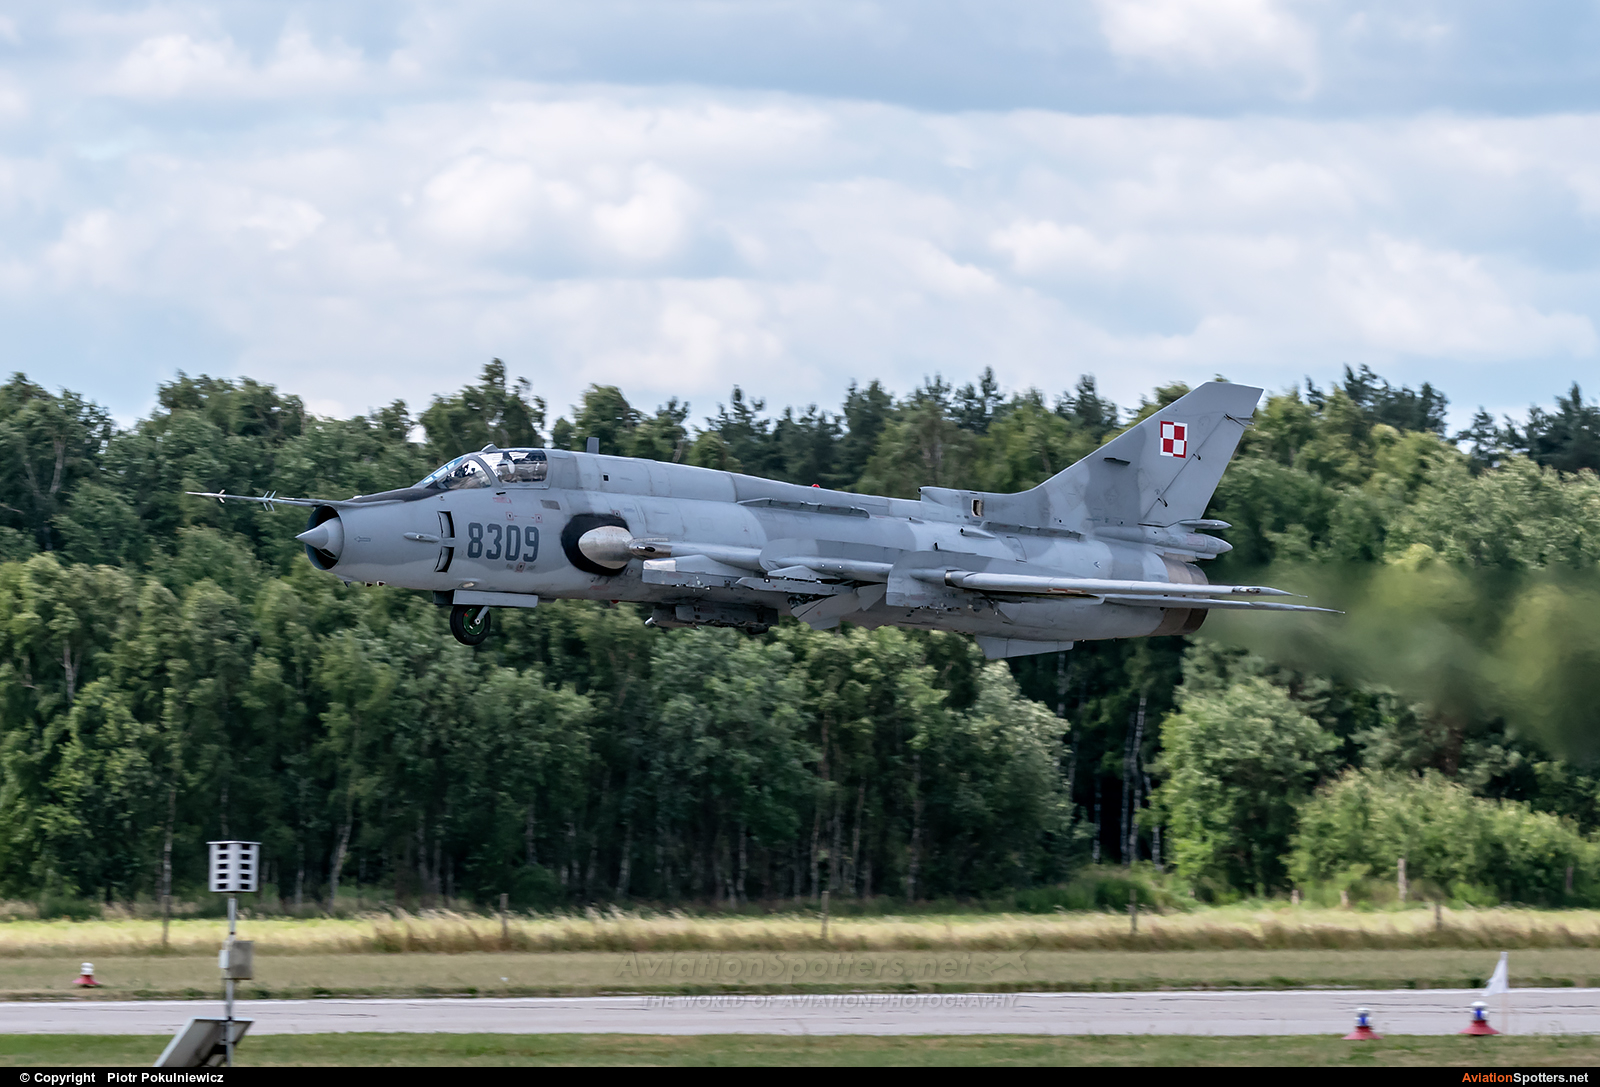 Poland - Air Force  -  Su-22M-4  (8309) By Piotr Pokulniewicz (Piciu)